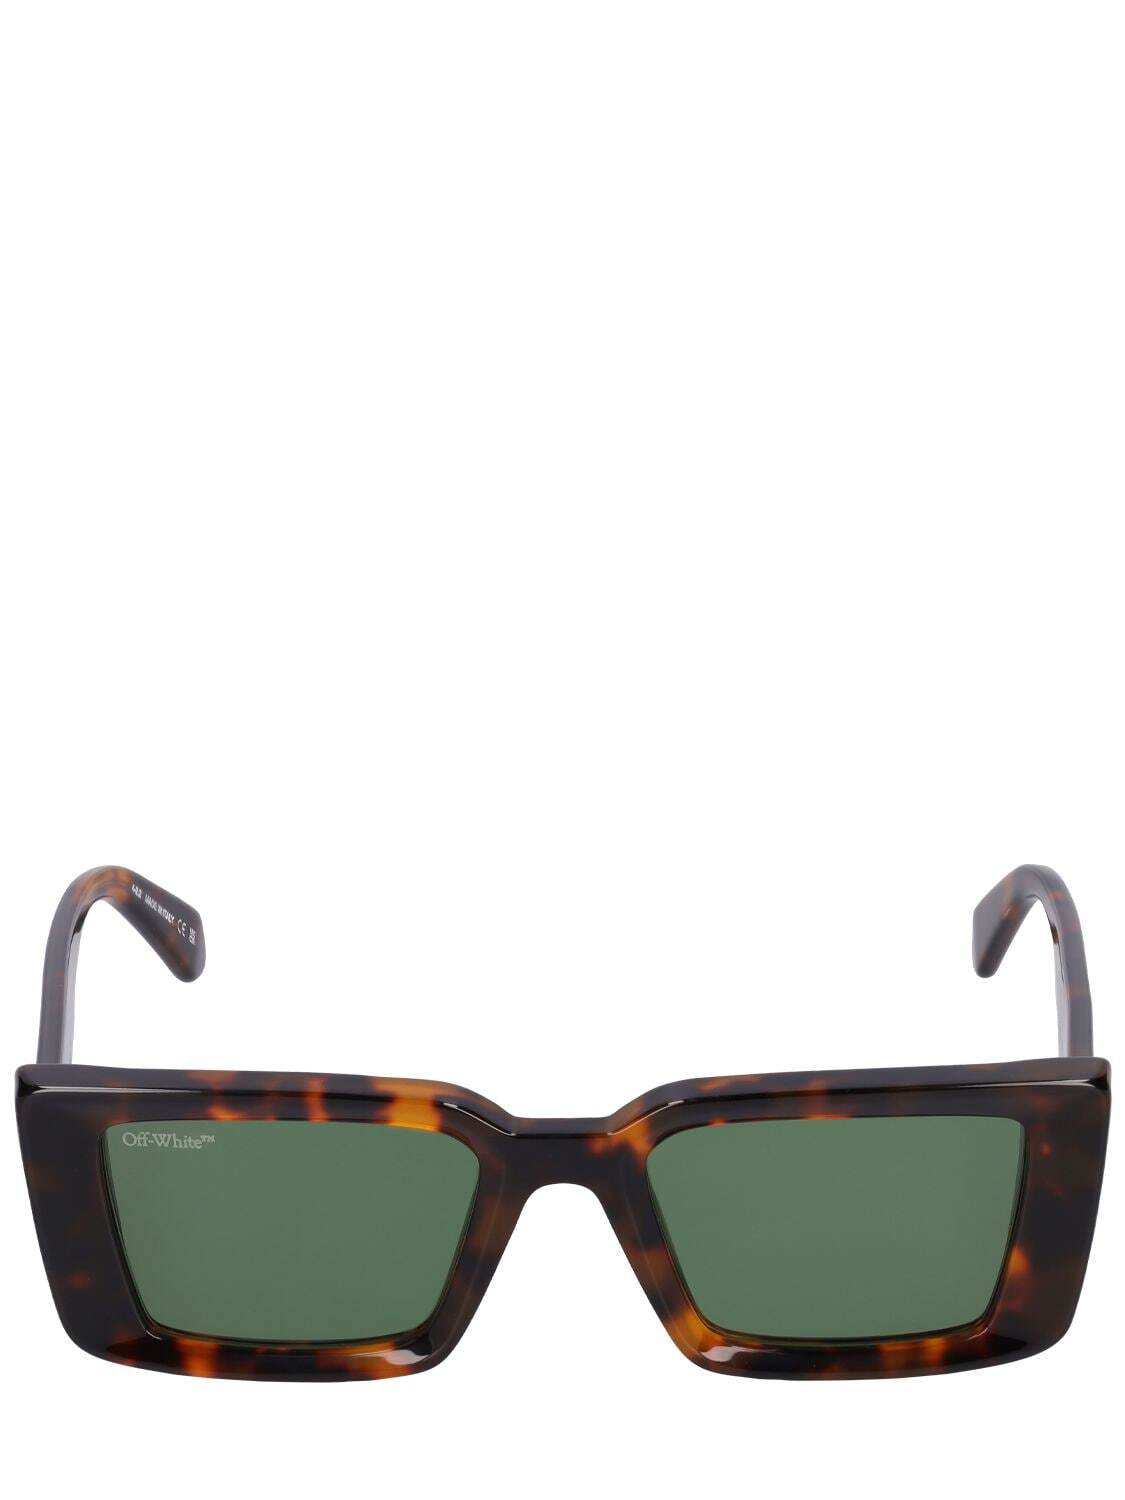 OFF-WHITE Savannah Squared Acetate Sunglasses in green